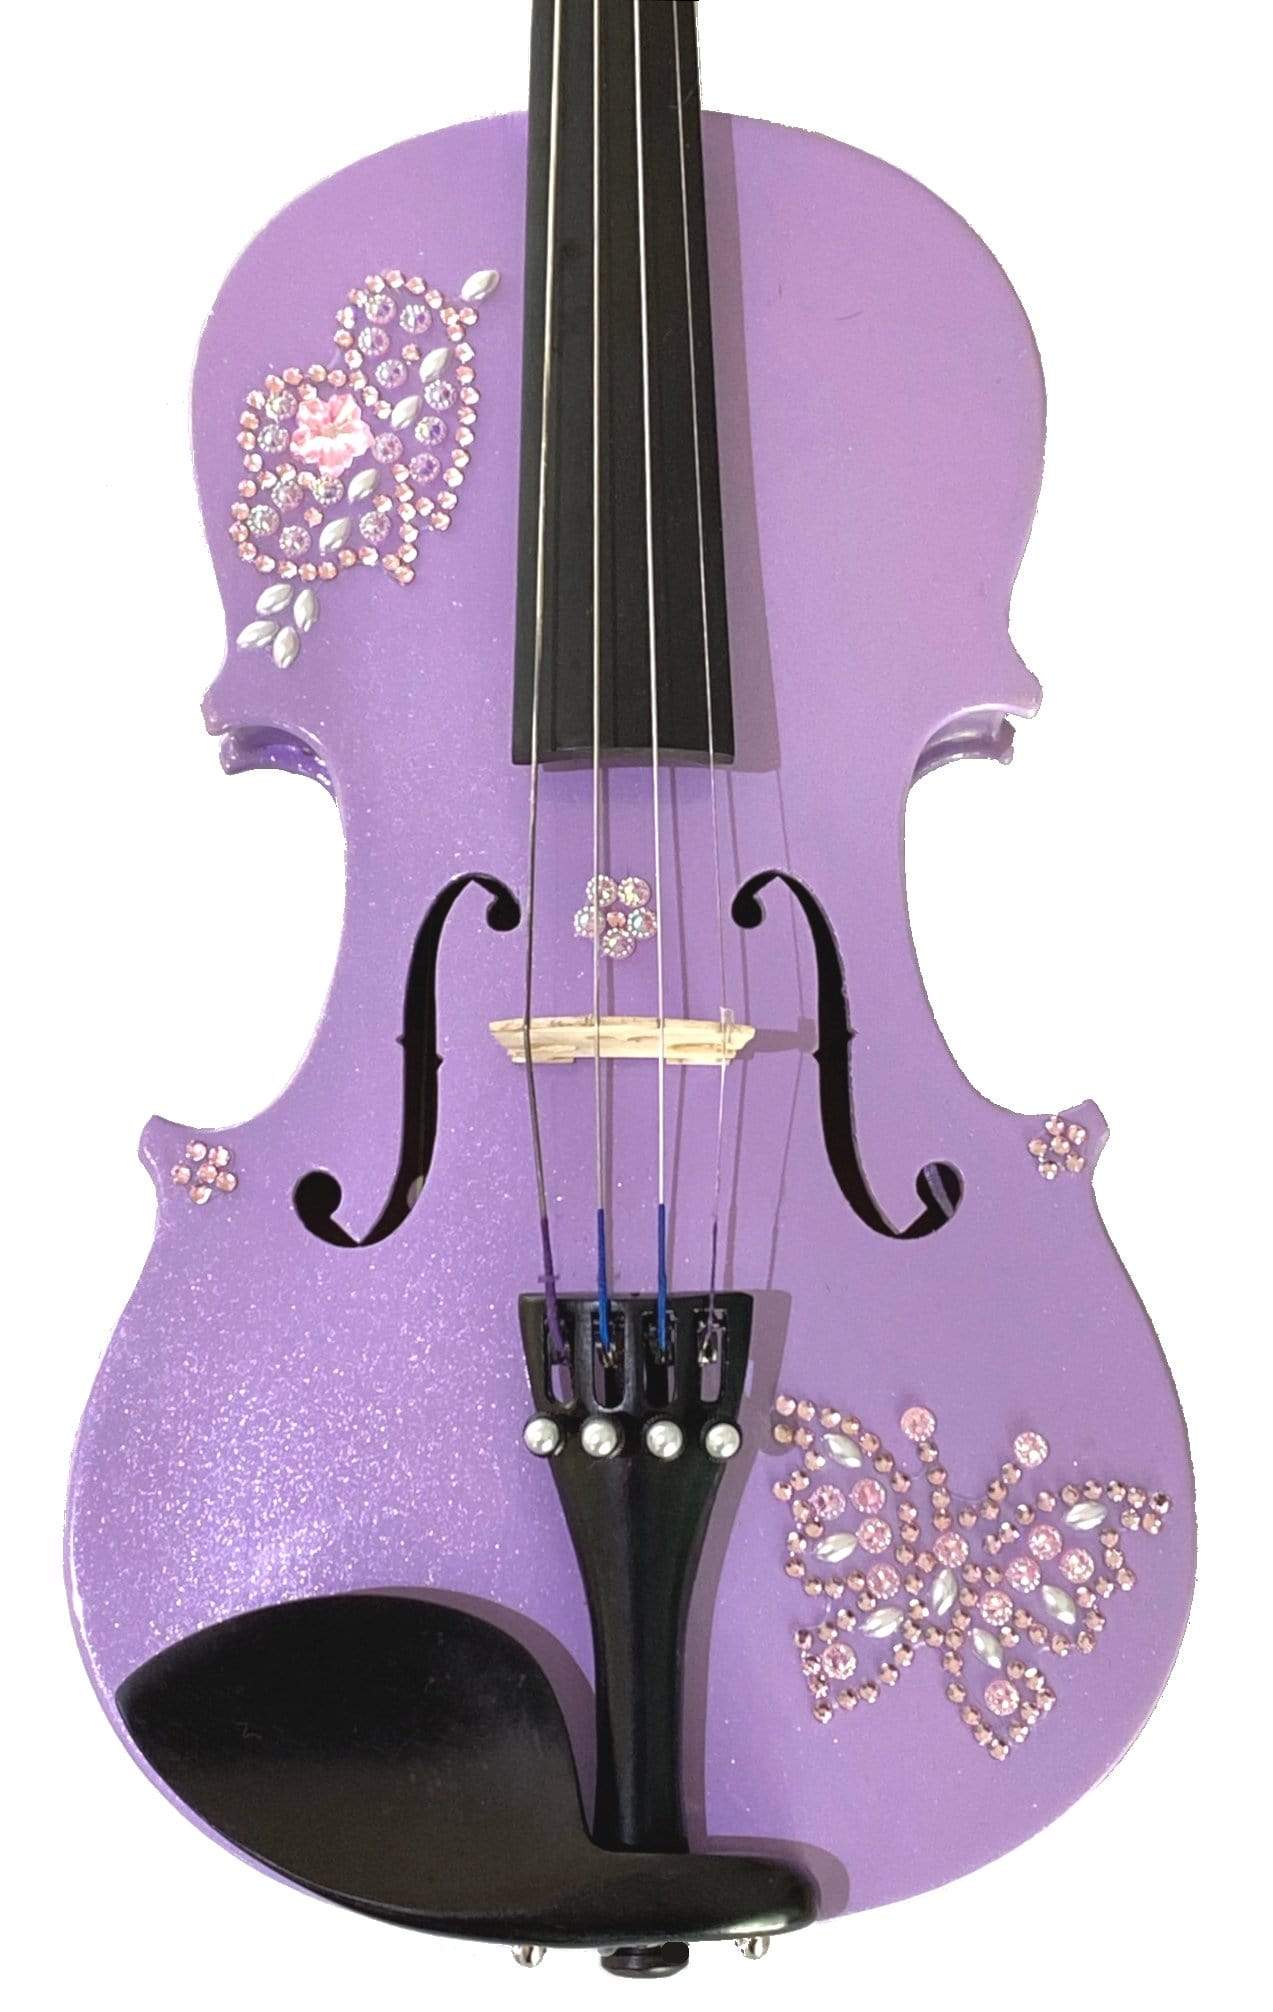 Himlen håndflade uheldigvis Rozanna's Glitzy Glam Violin Outfit – Rozanna's Violins